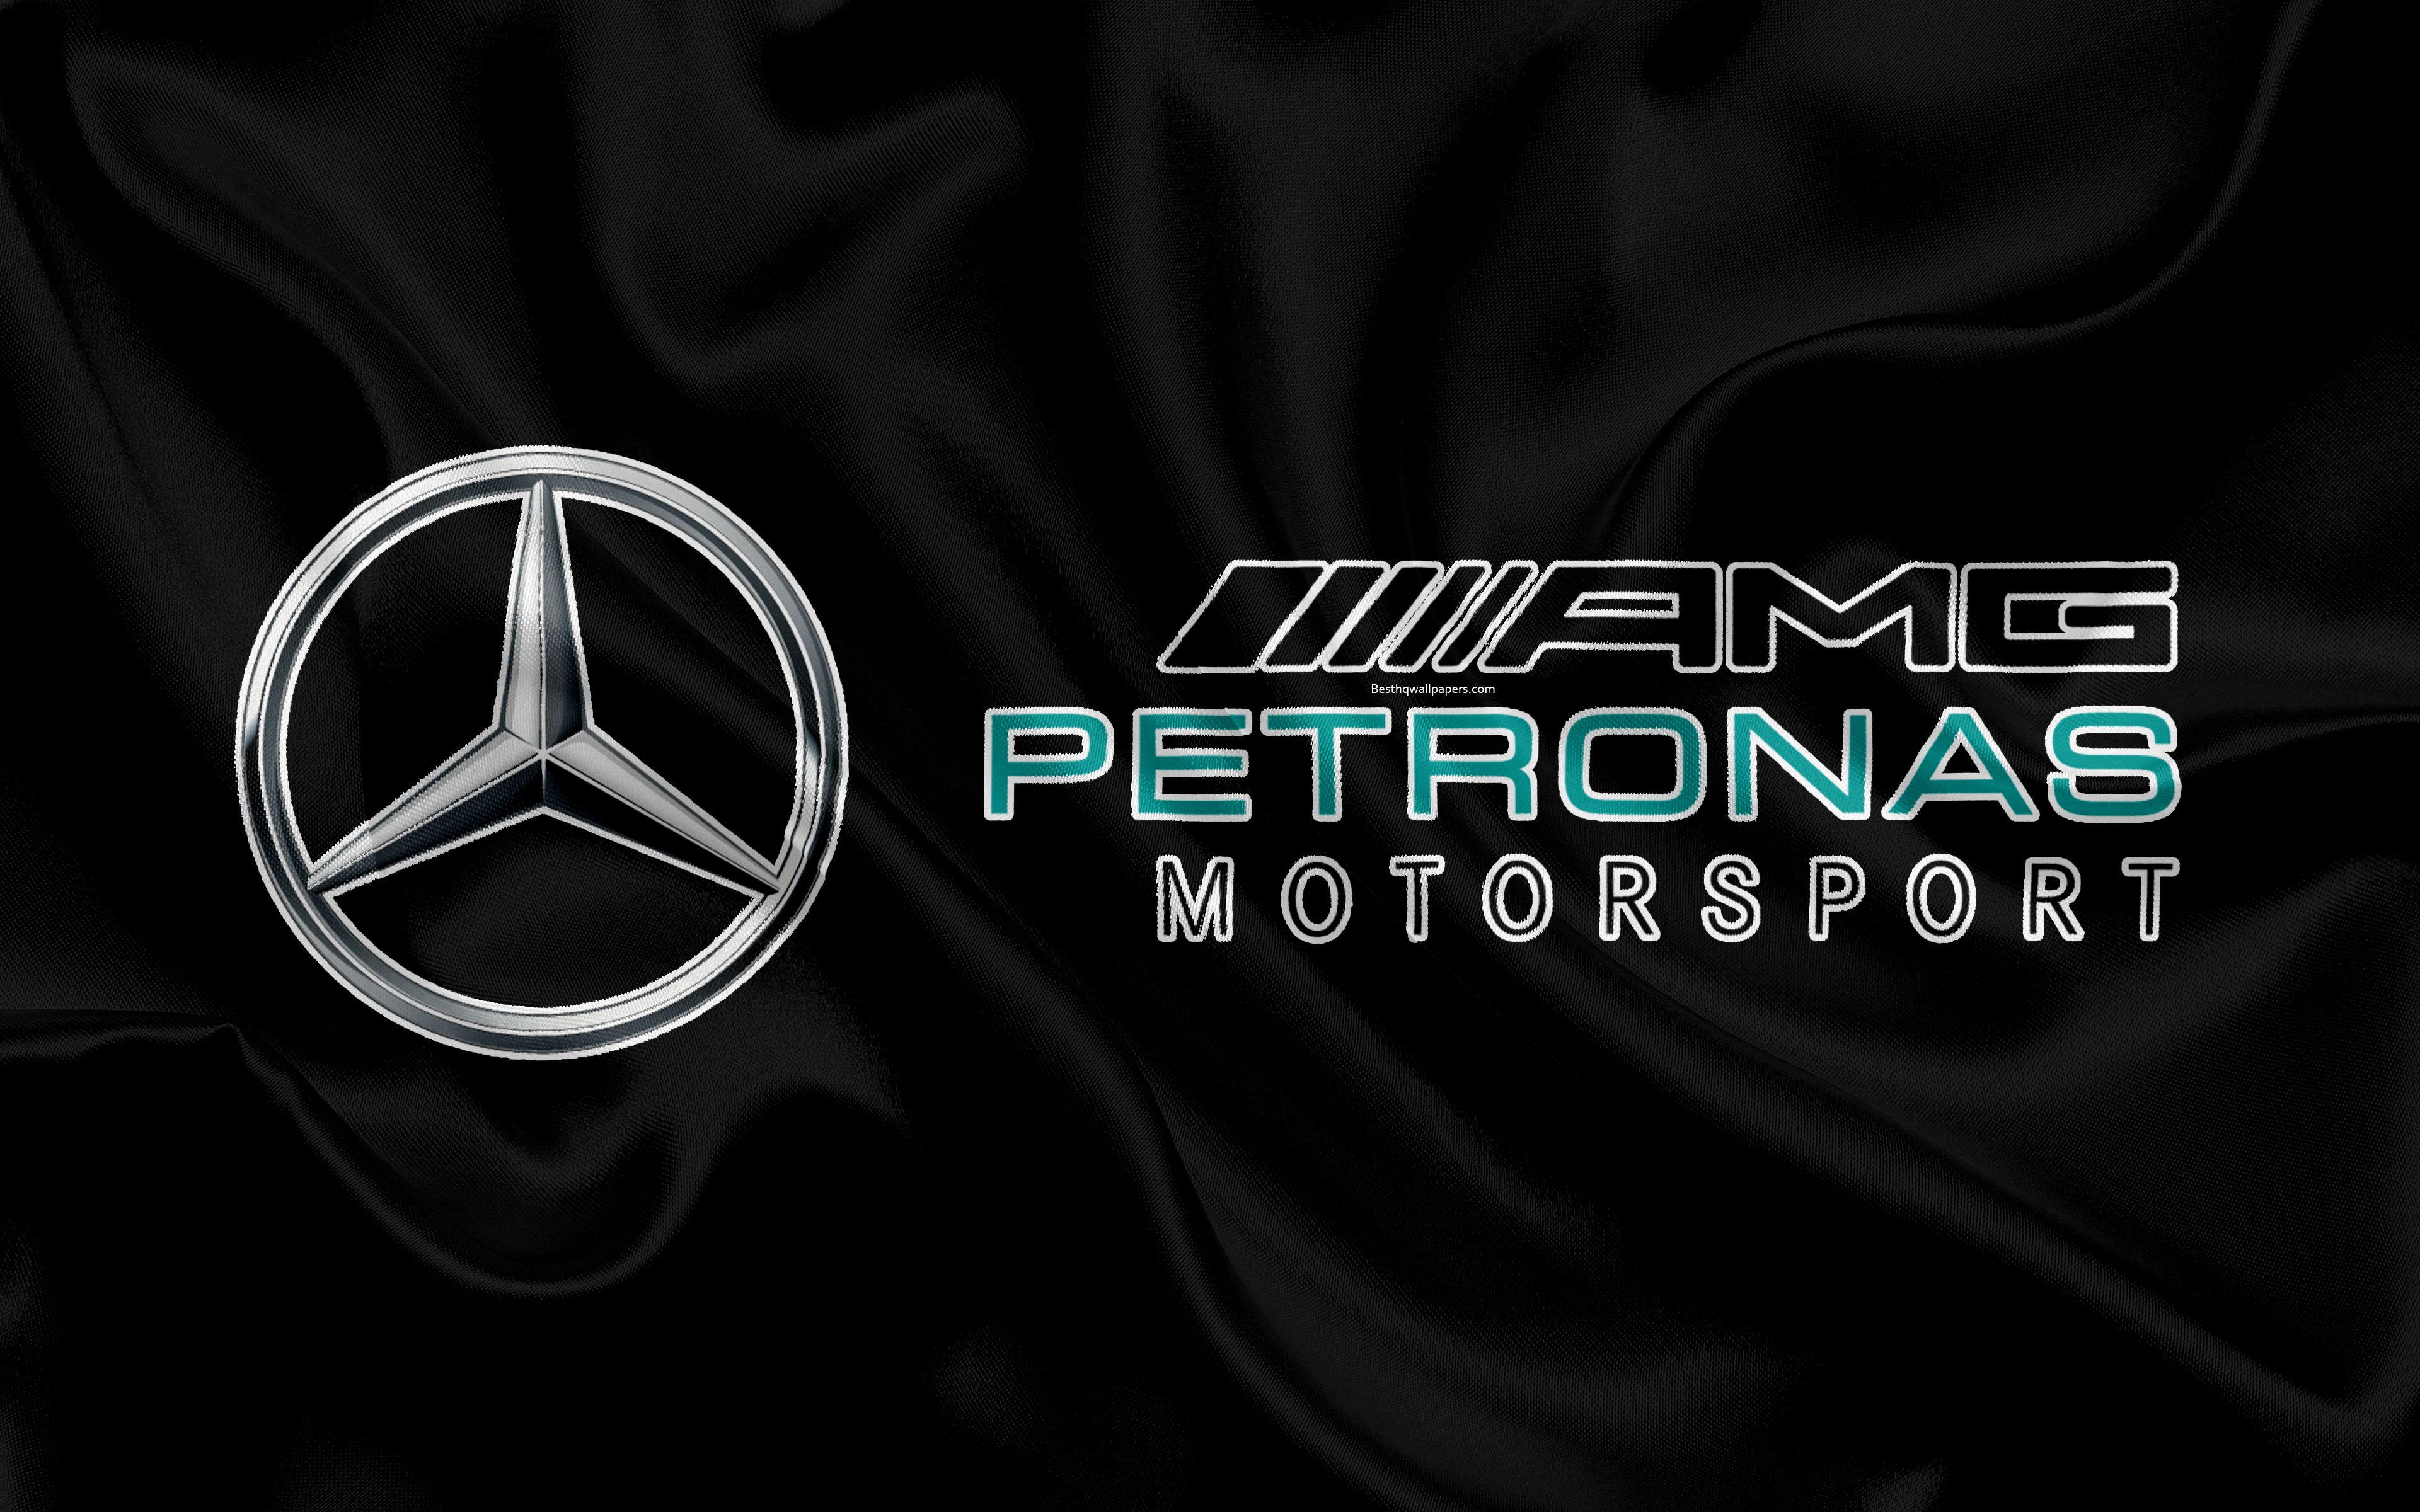 Official Mercedes-AMG PETRONAS F1 Team Wallpapers - Mercedes-AMG PETRONAS F1  Team